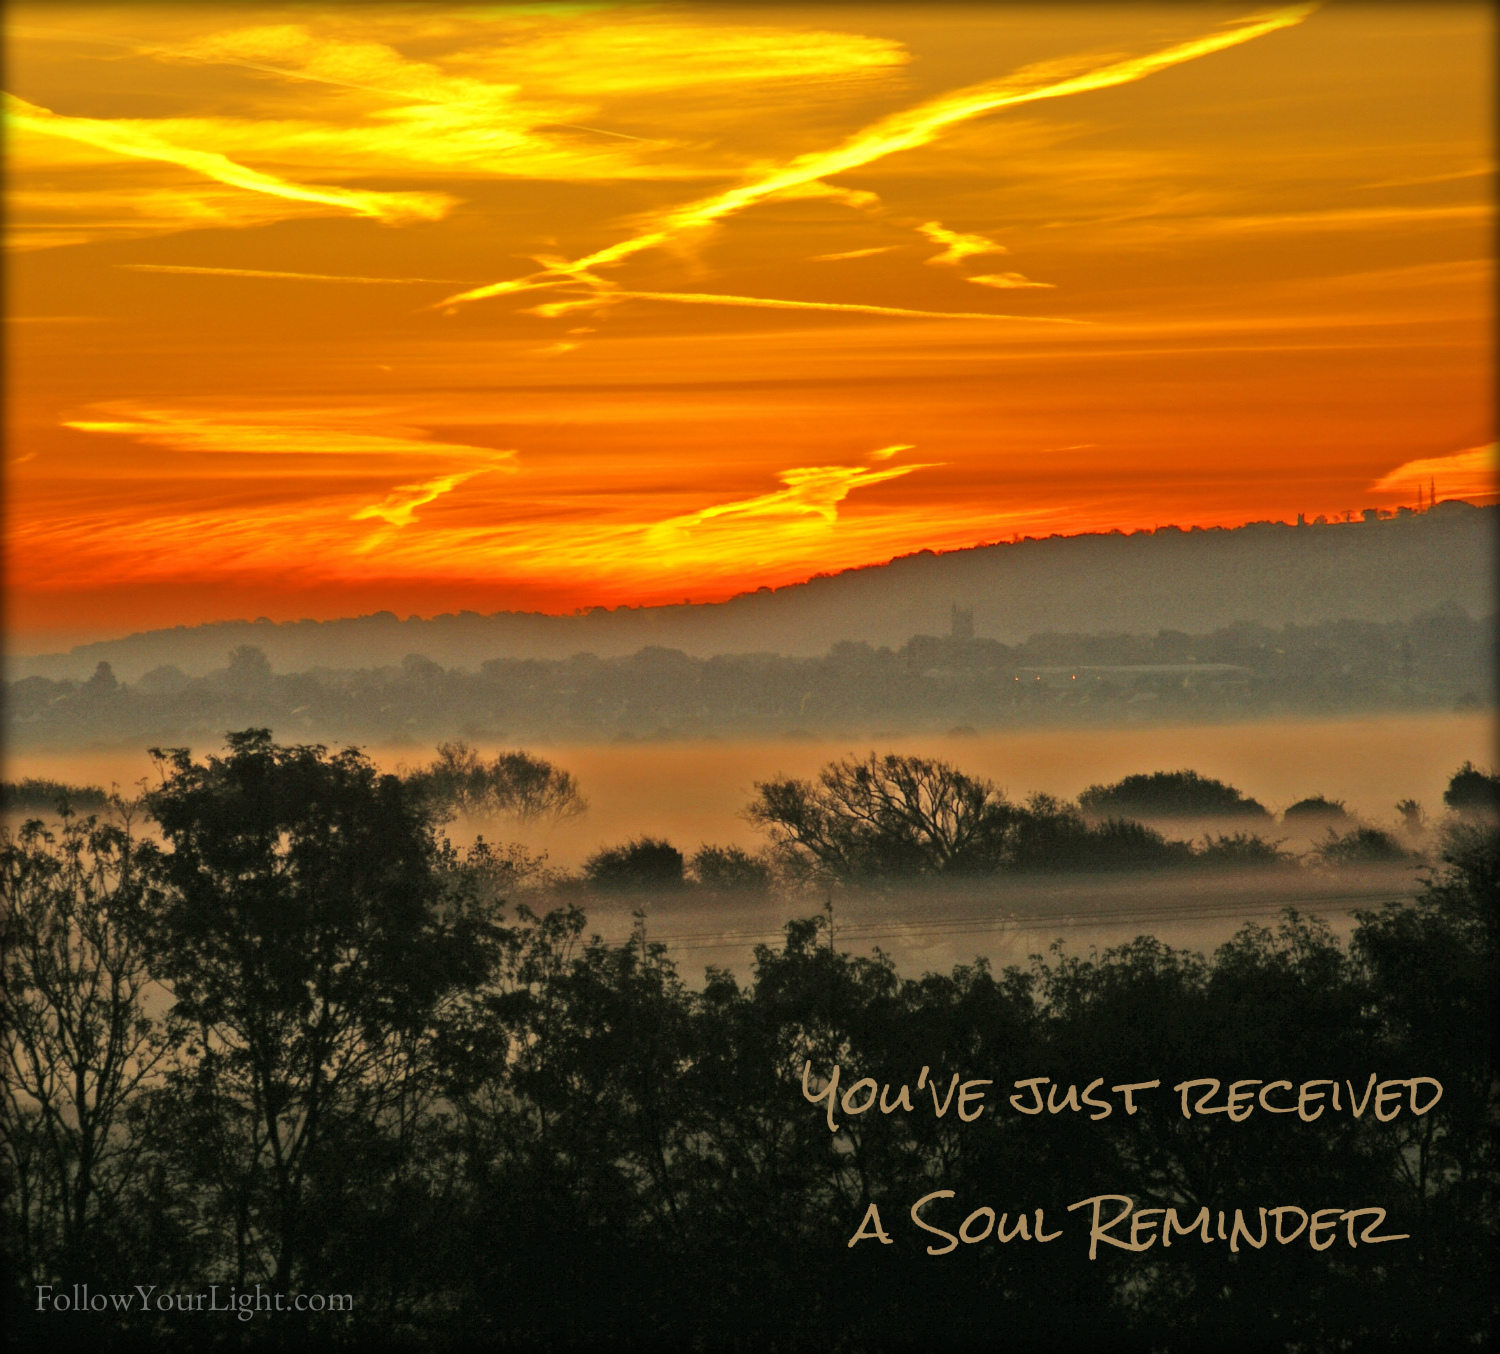 Soul Reminders